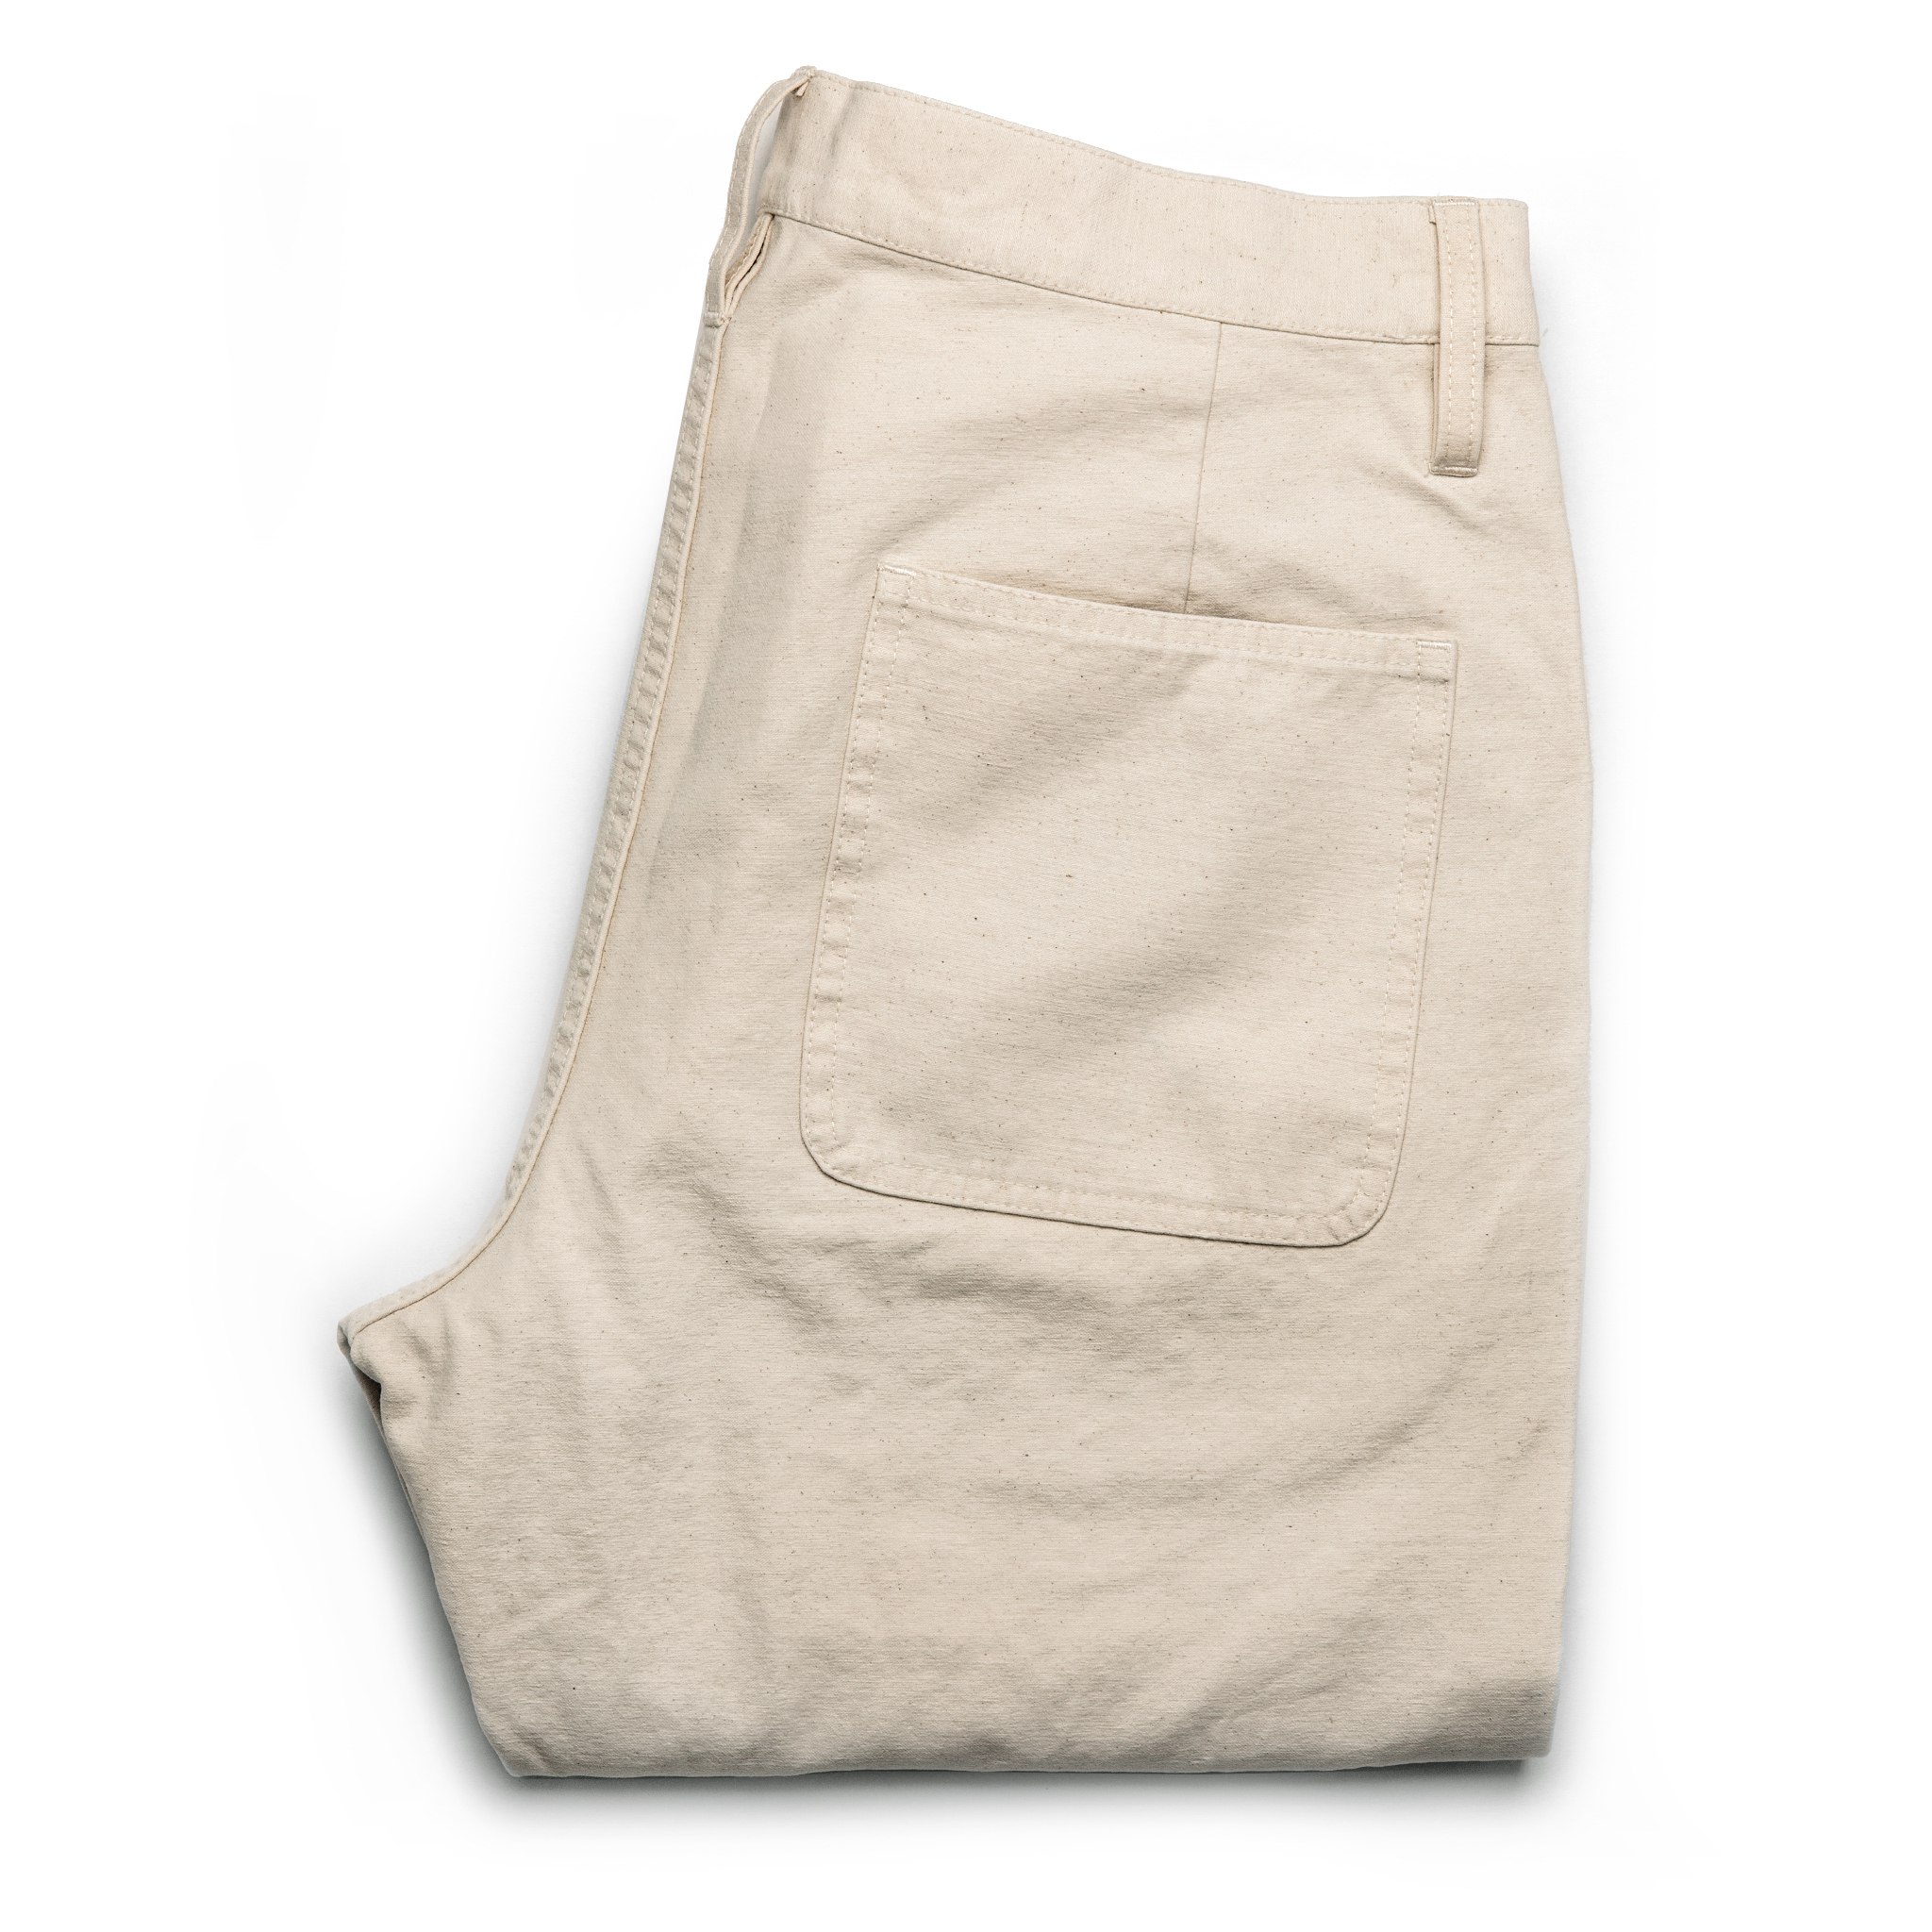 Eddie Bauer fleece lined khakii cargo Rainier pants NWT mens 36 x 32 $80